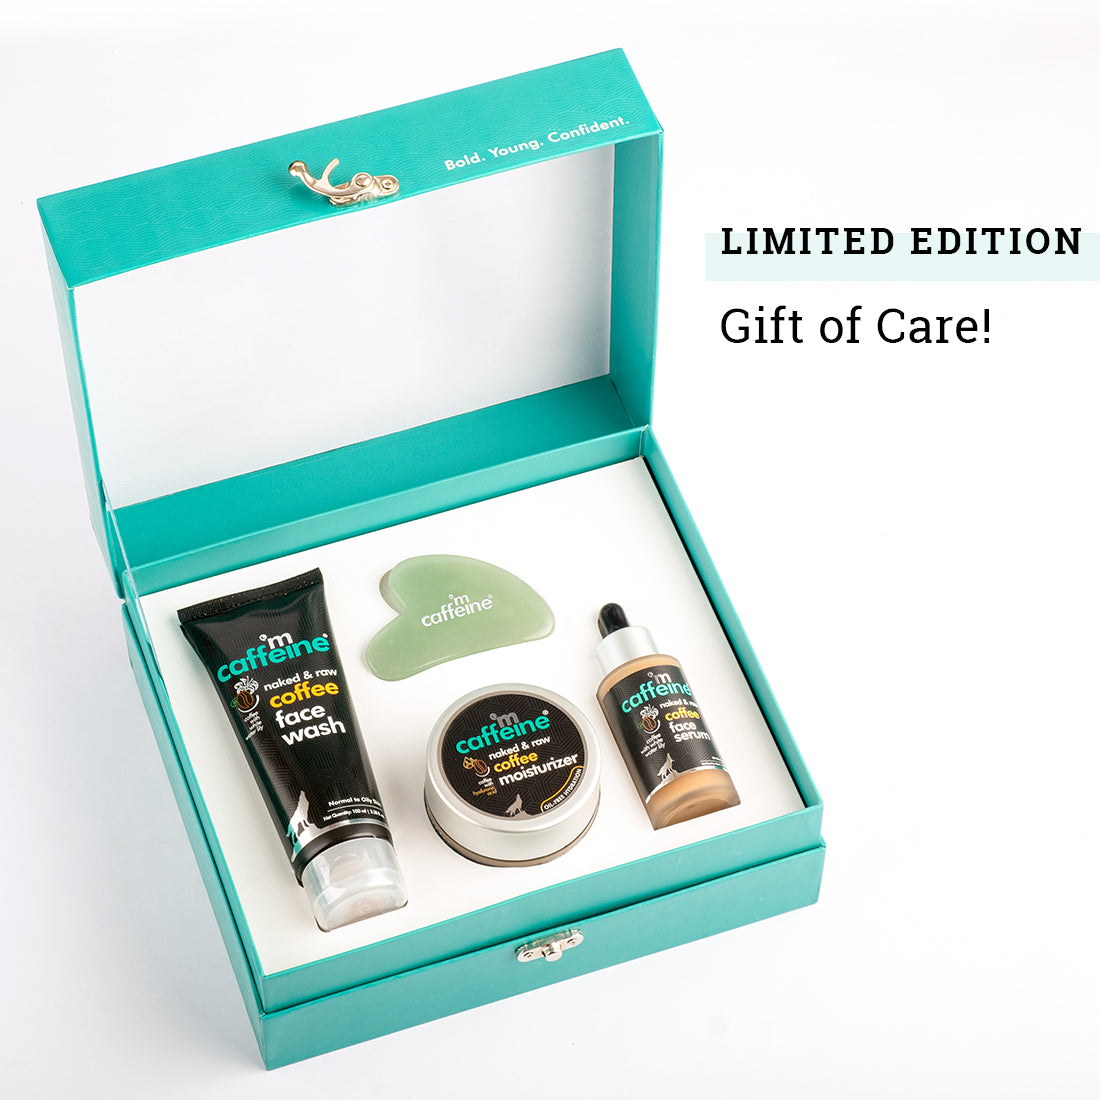 mCaffeine Self Care With Coffee - Gift Kit